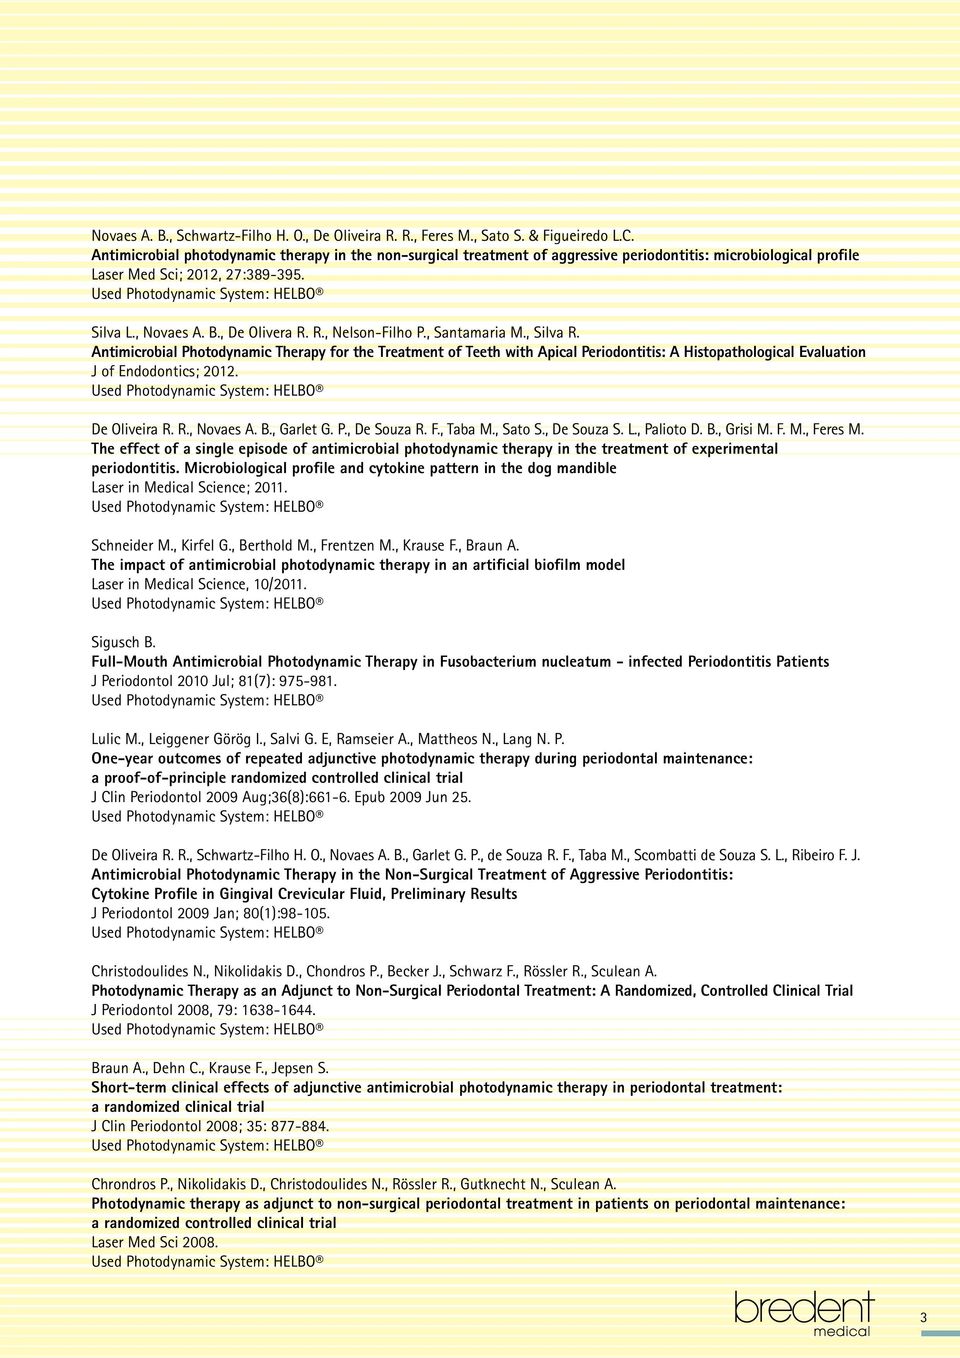 R., Nelson-Filho P., Santamaria M., Silva R. Antimicrobial Photodynamic Therapy for the Treatment of Teeth with Apical Periodontitis: A Histopathological Evaluation J of Endodontics; 2012.